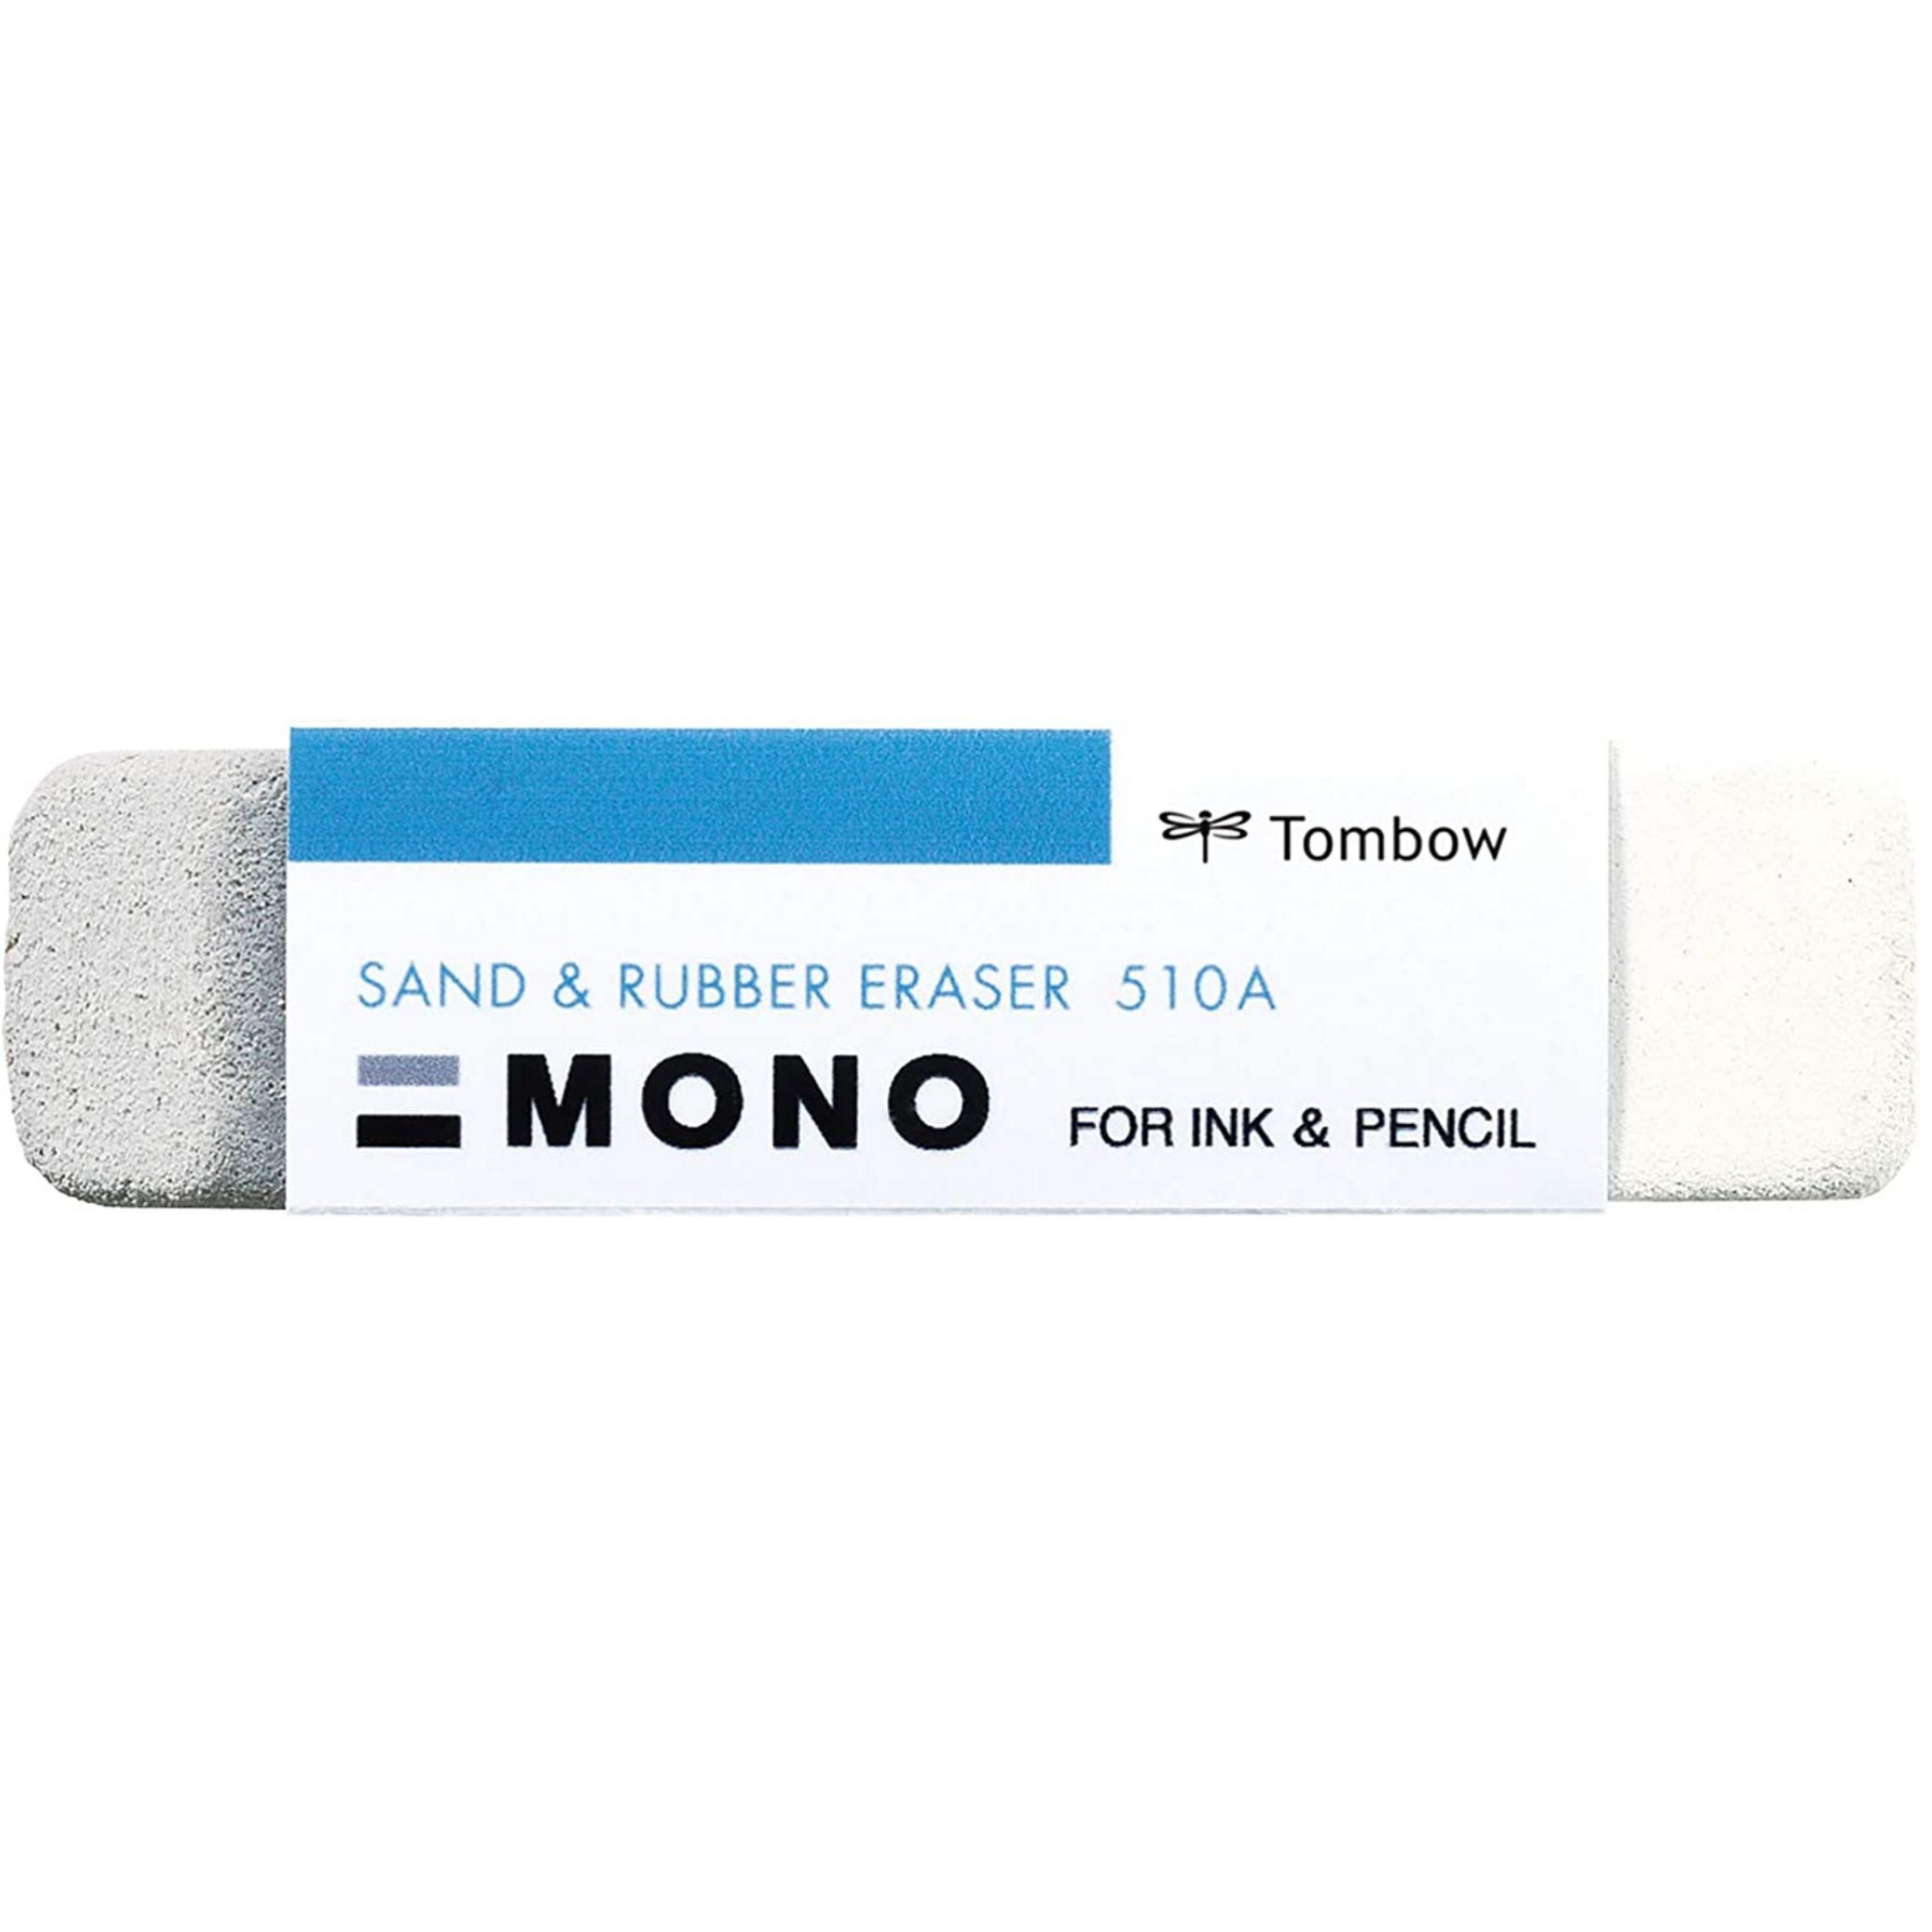 Borracha Mono Sand & Rubber da Tombow.